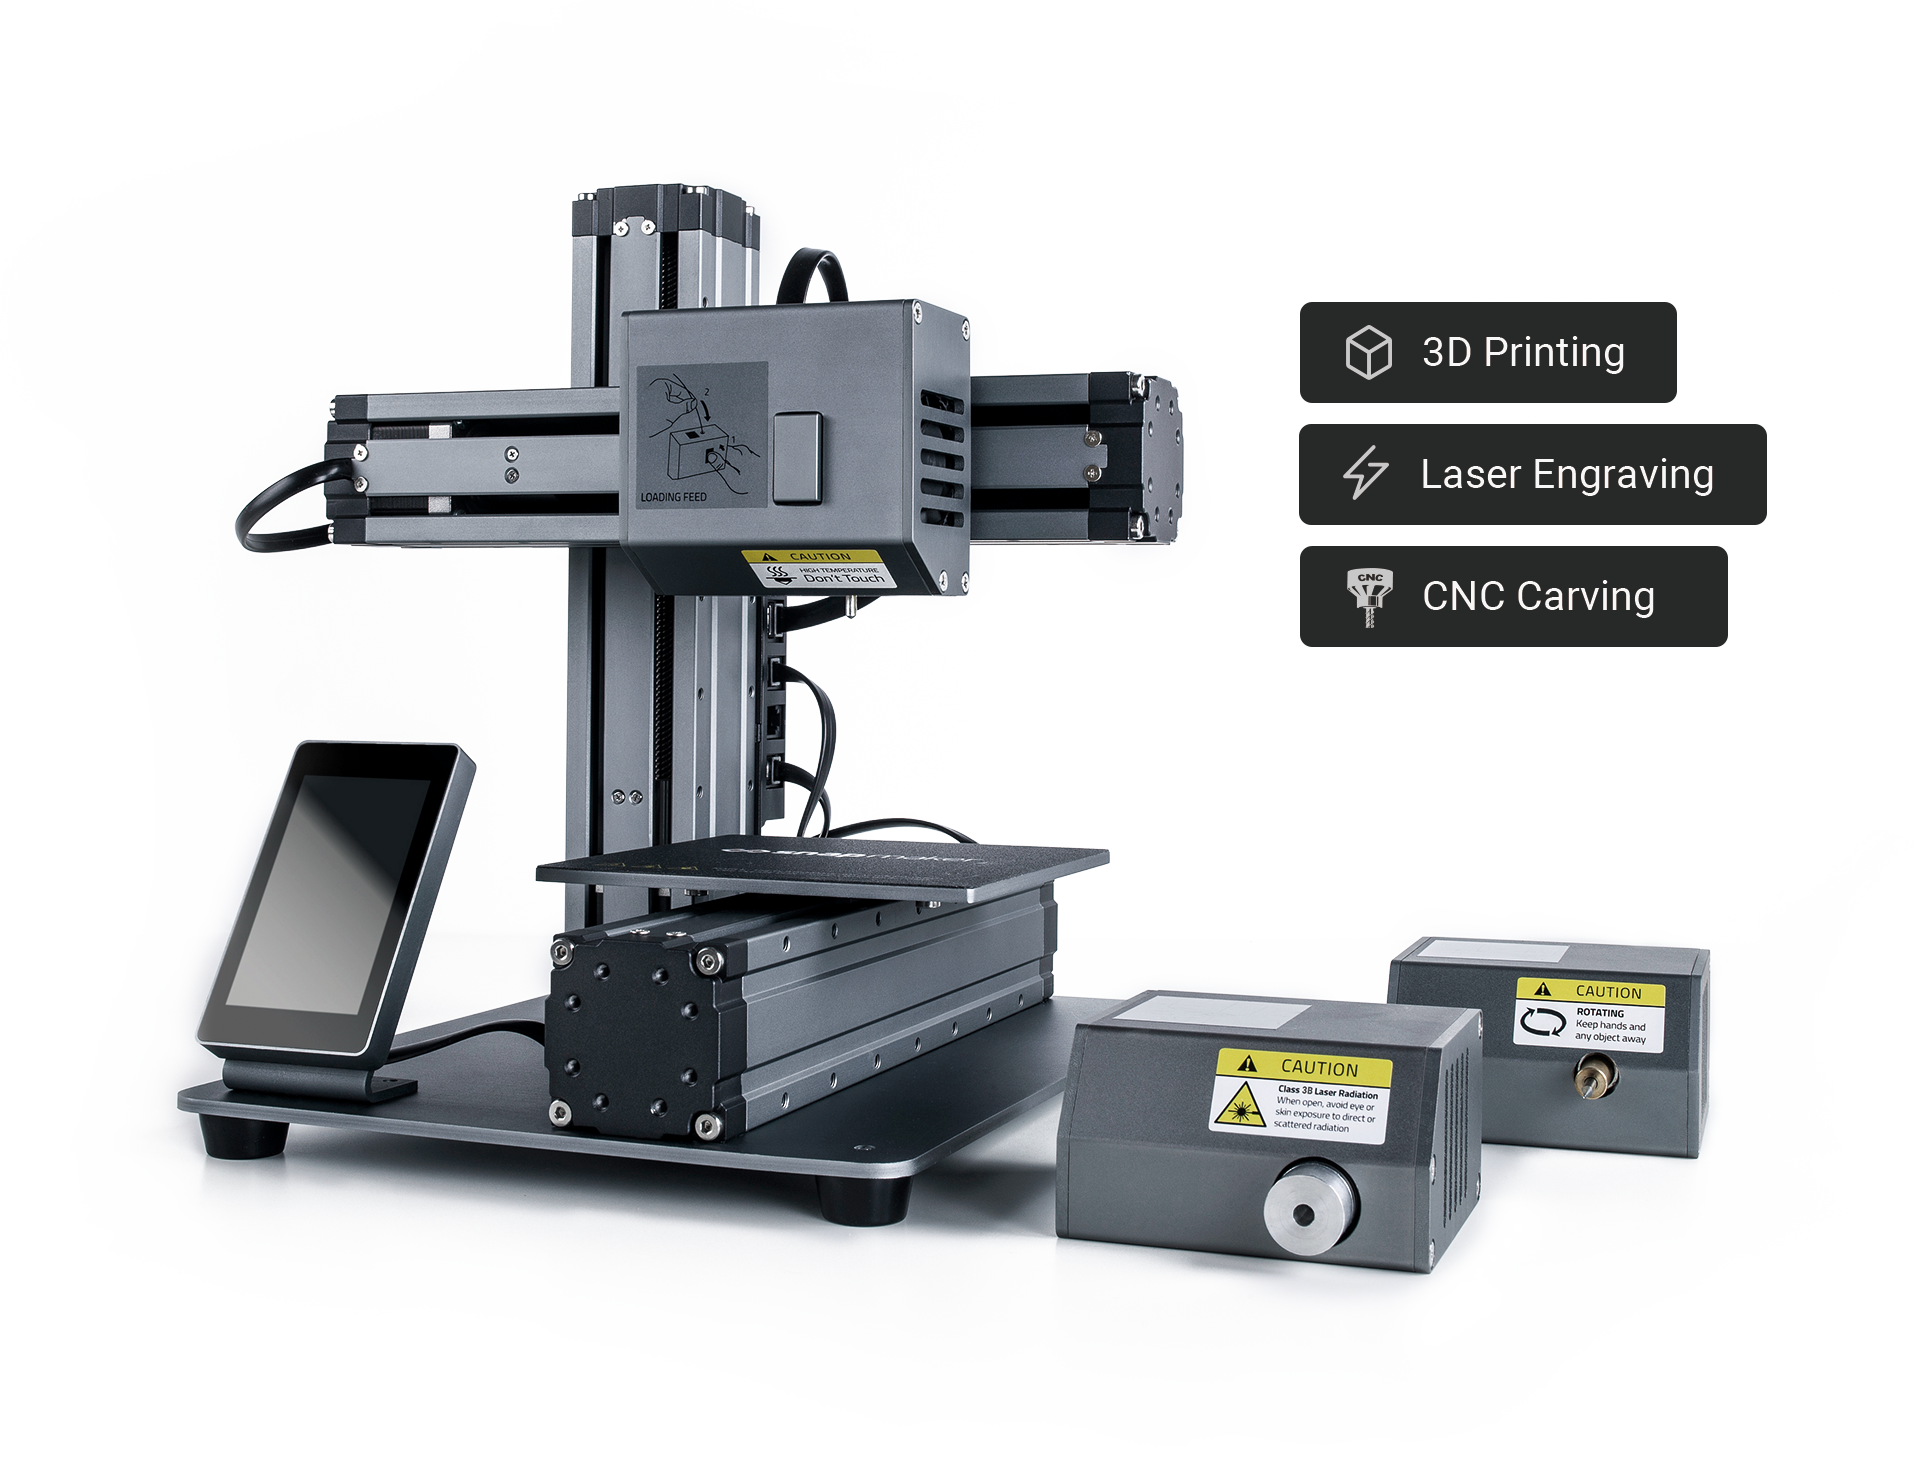 Snapmaker Original 3-in-1 3D Printer, CNC, Laser Engraver. - Snapmaker Overview 1024x1024@2x